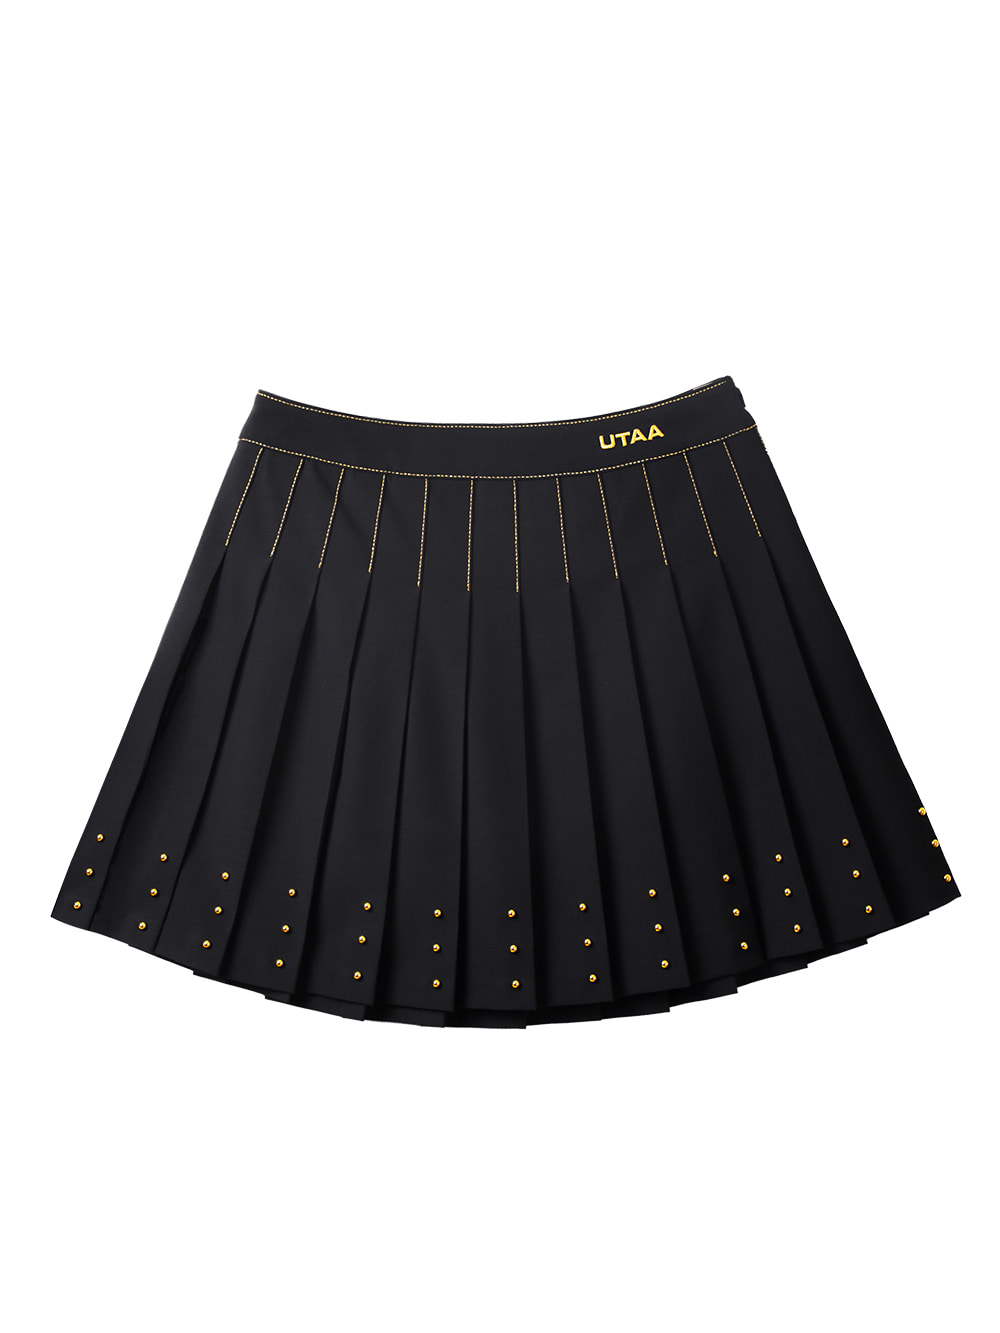 UTAA Gild Craft Flare Skirt : Black (UB2SKF250BK)